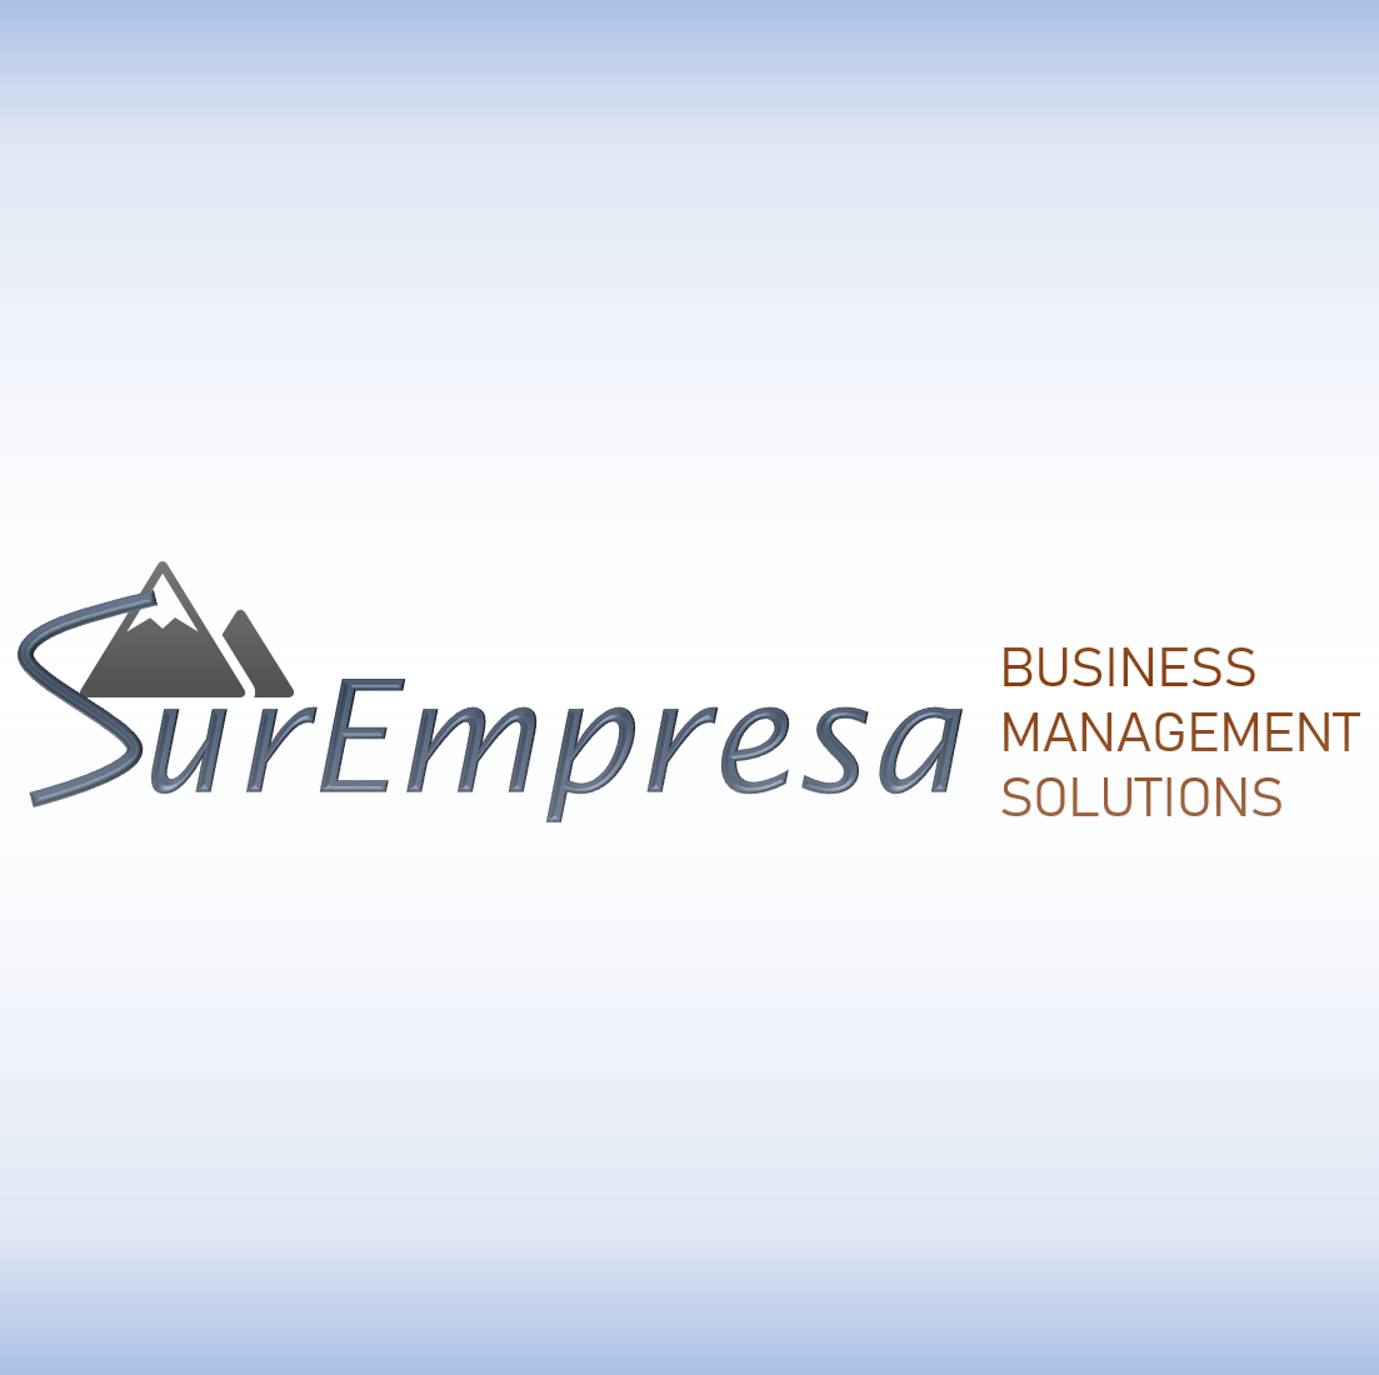 SurEmpresa Business Management Solutions